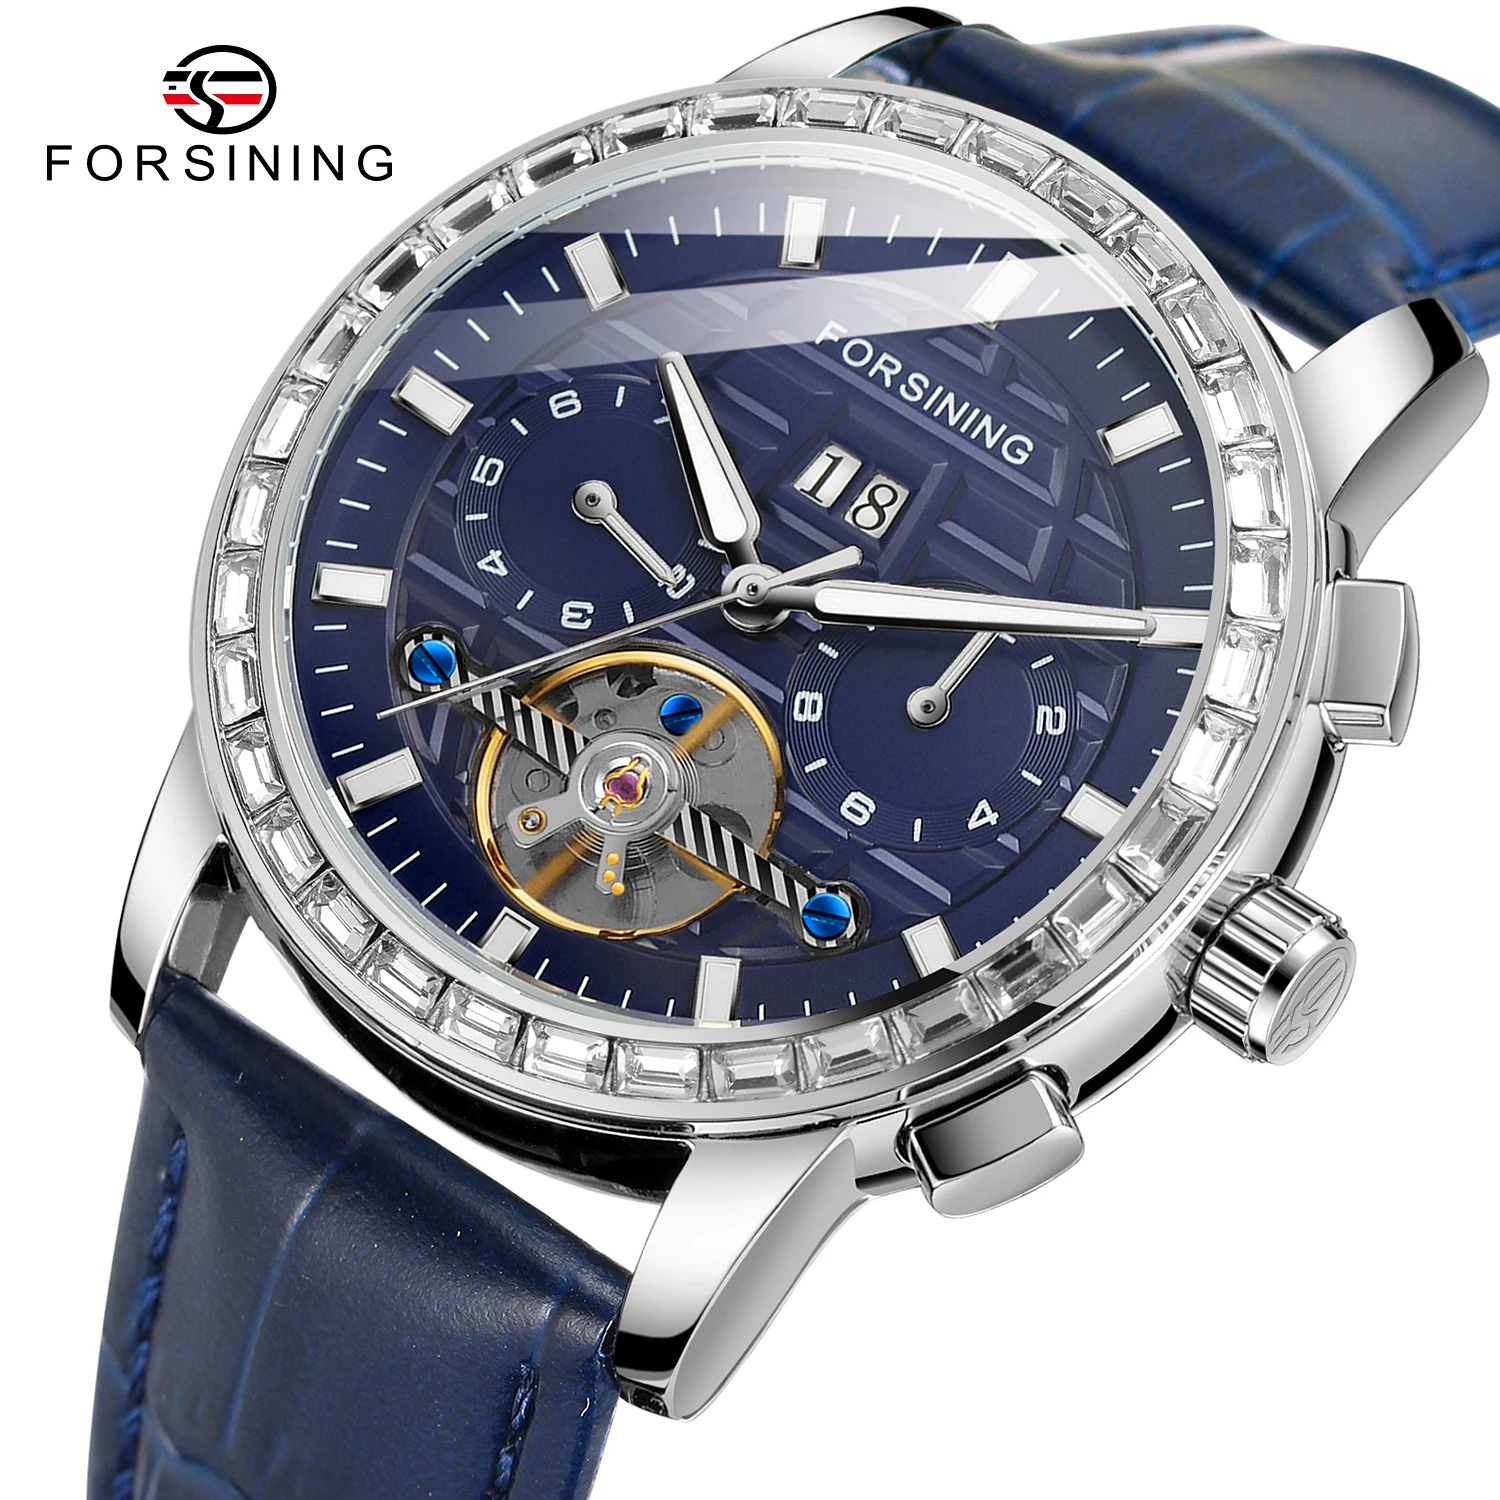 

Forsining Blue Skeleton Tourbillon Watch for Men Calendar Date Display Luxury Genuine Leather Belt Automatic Mechanical Watches